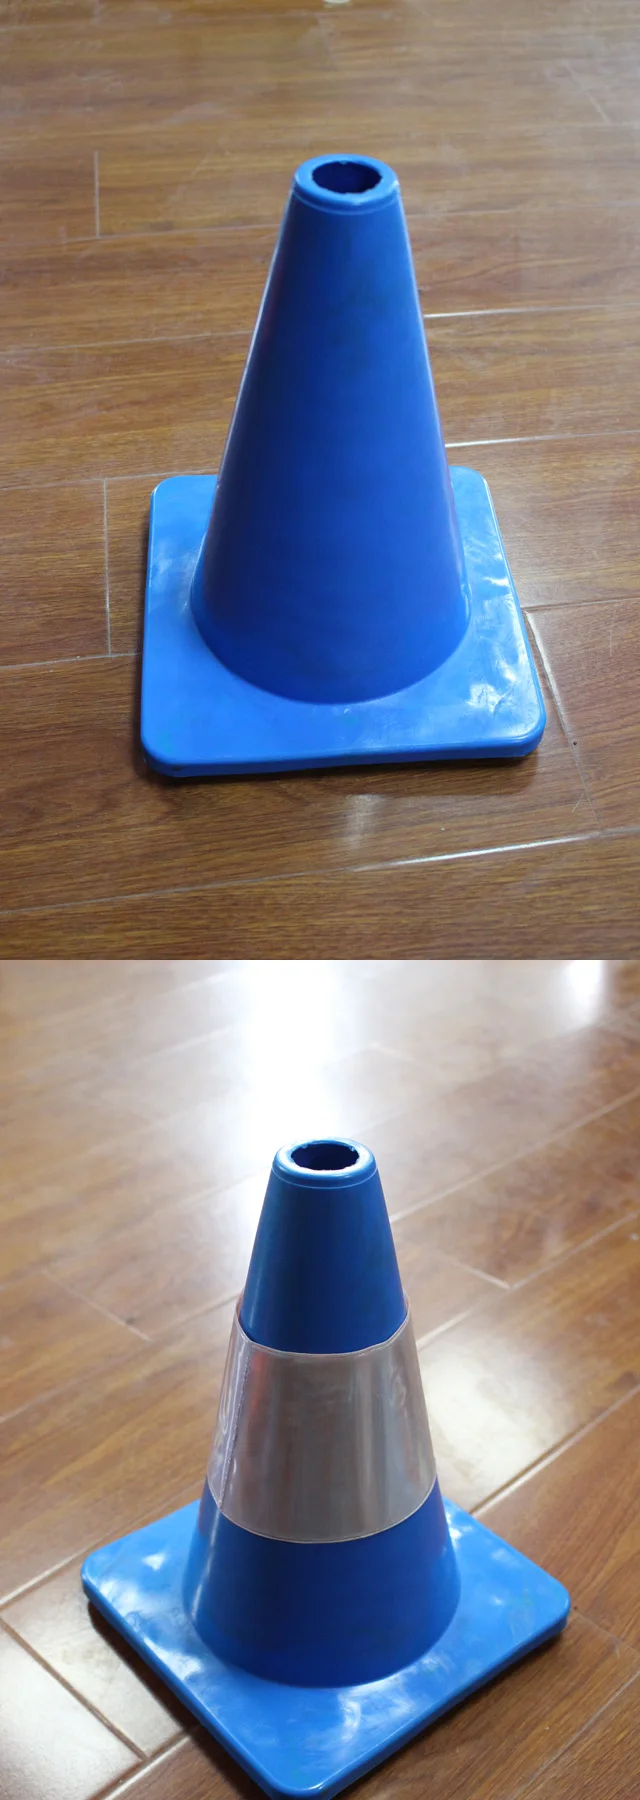 blue traffic cone